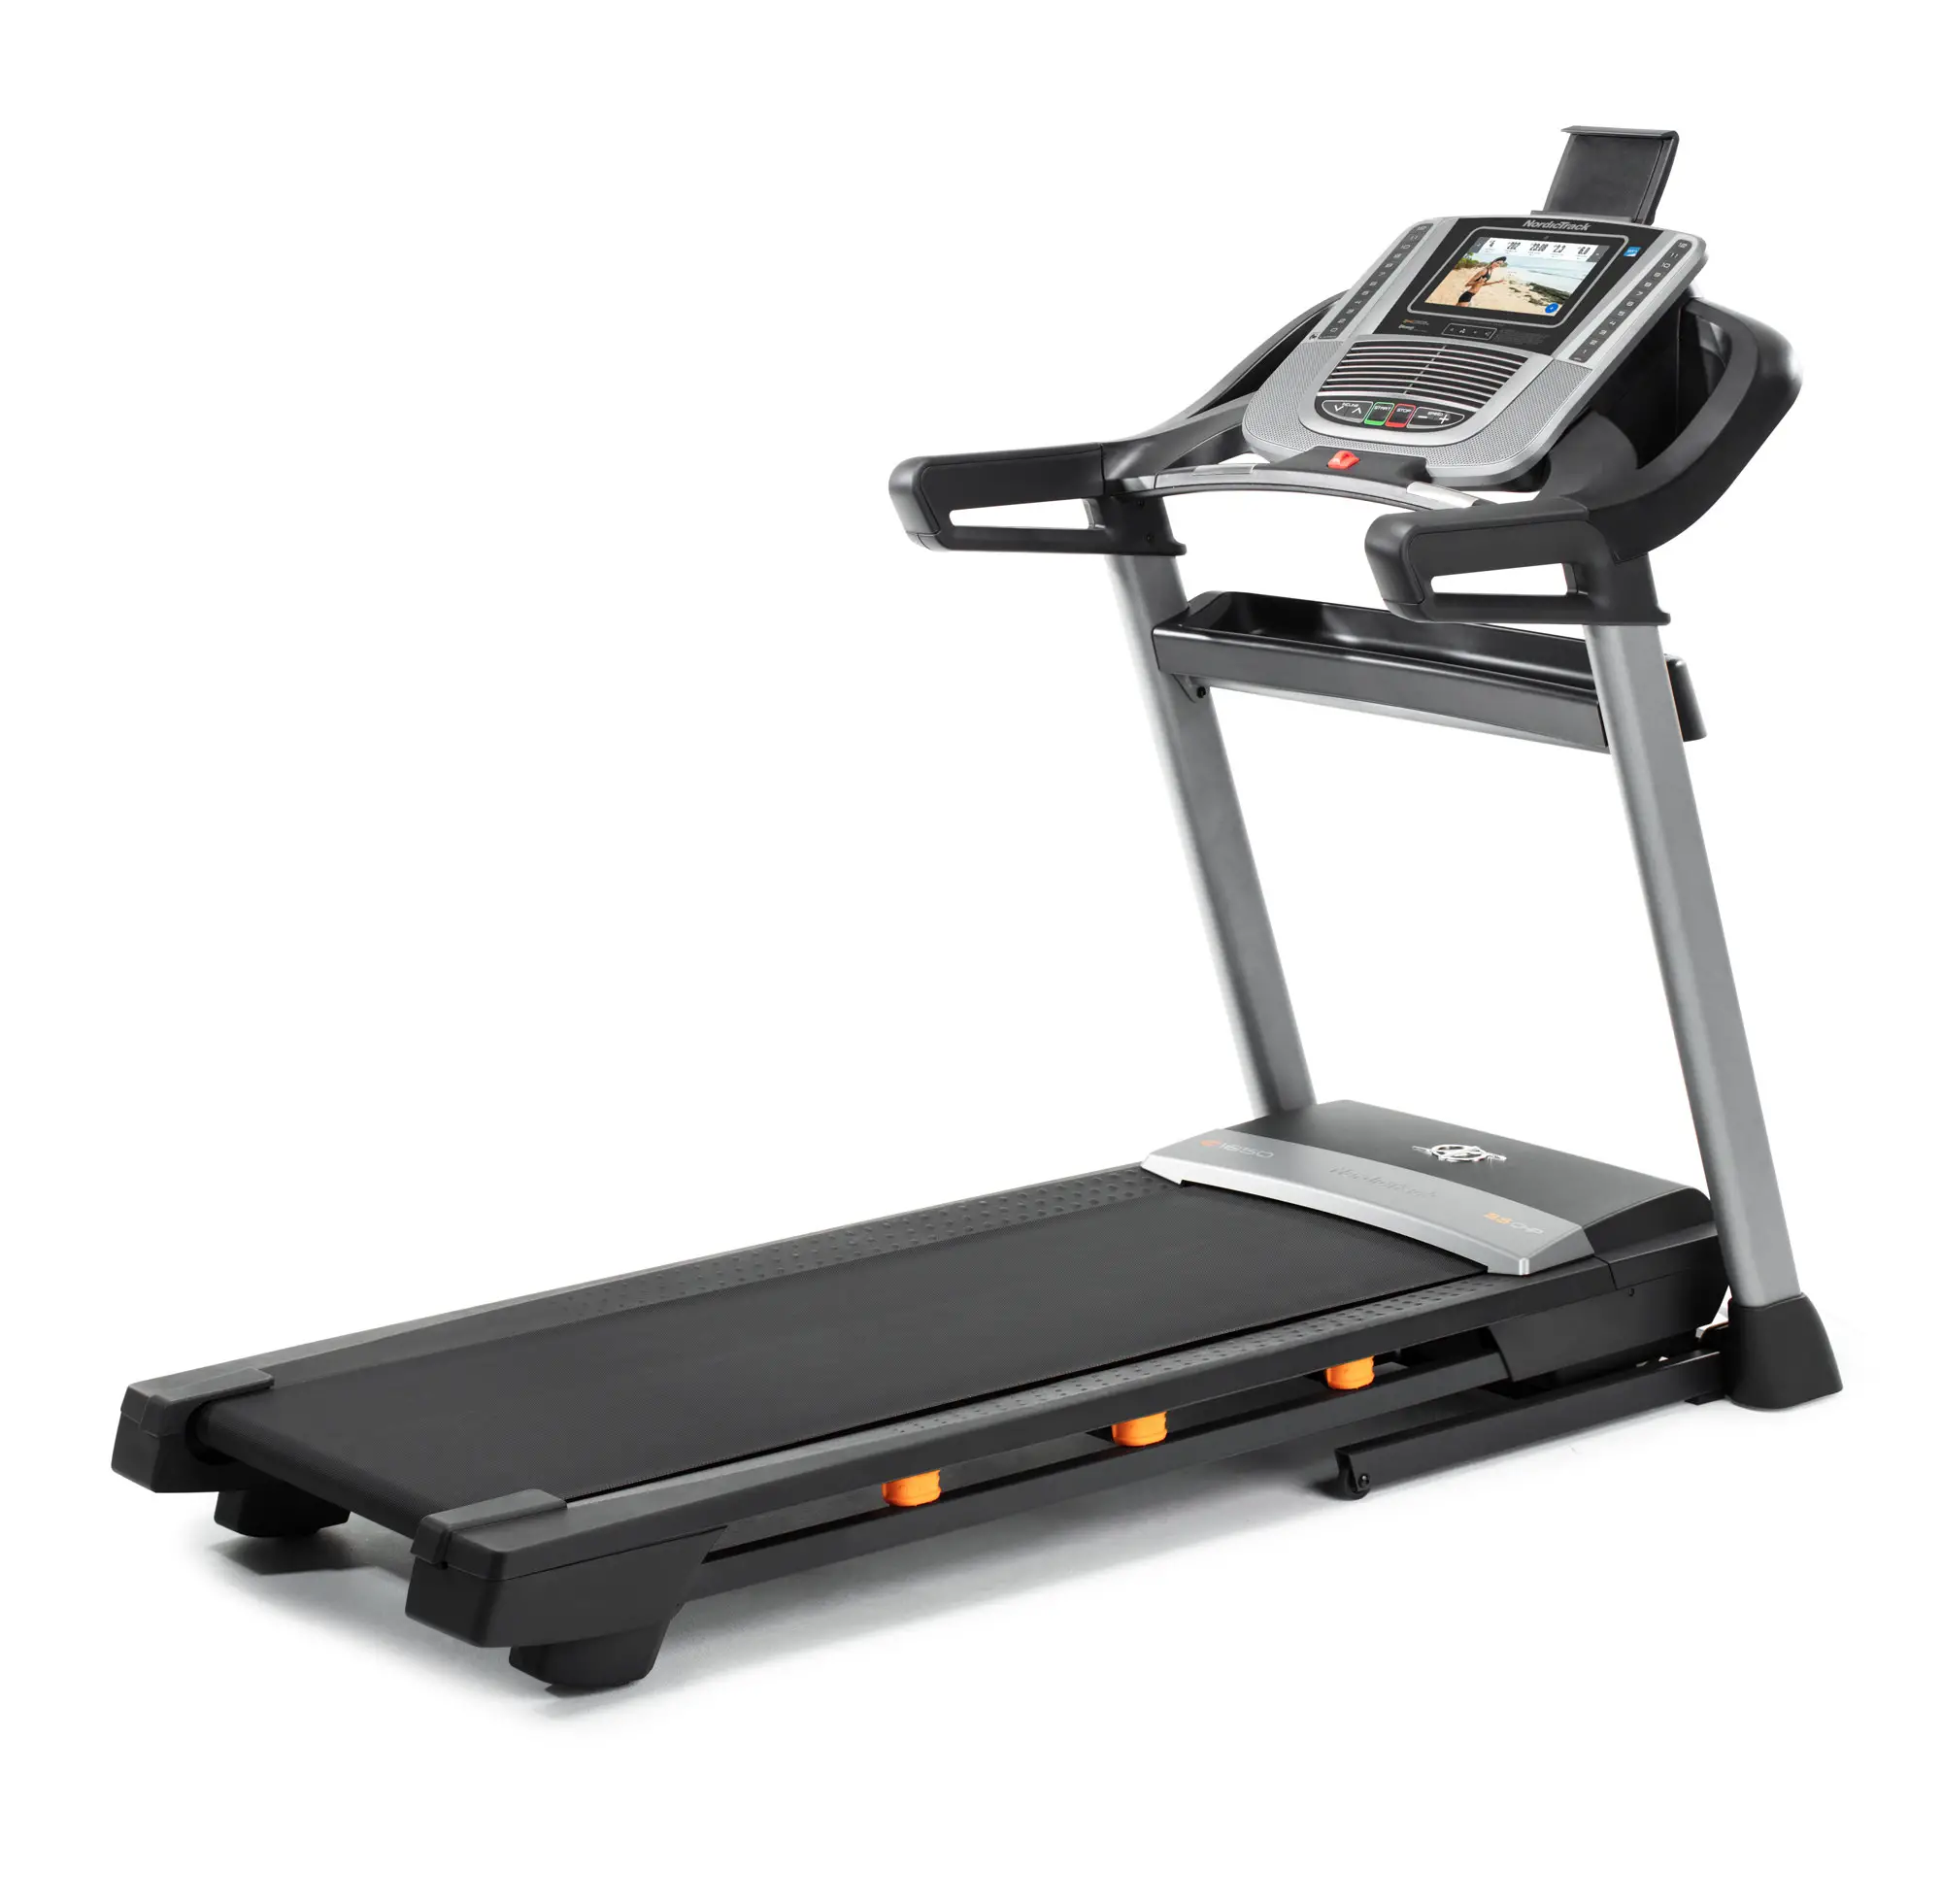 Treadmill vs Elliptical vs Bike vs Rowing Machine